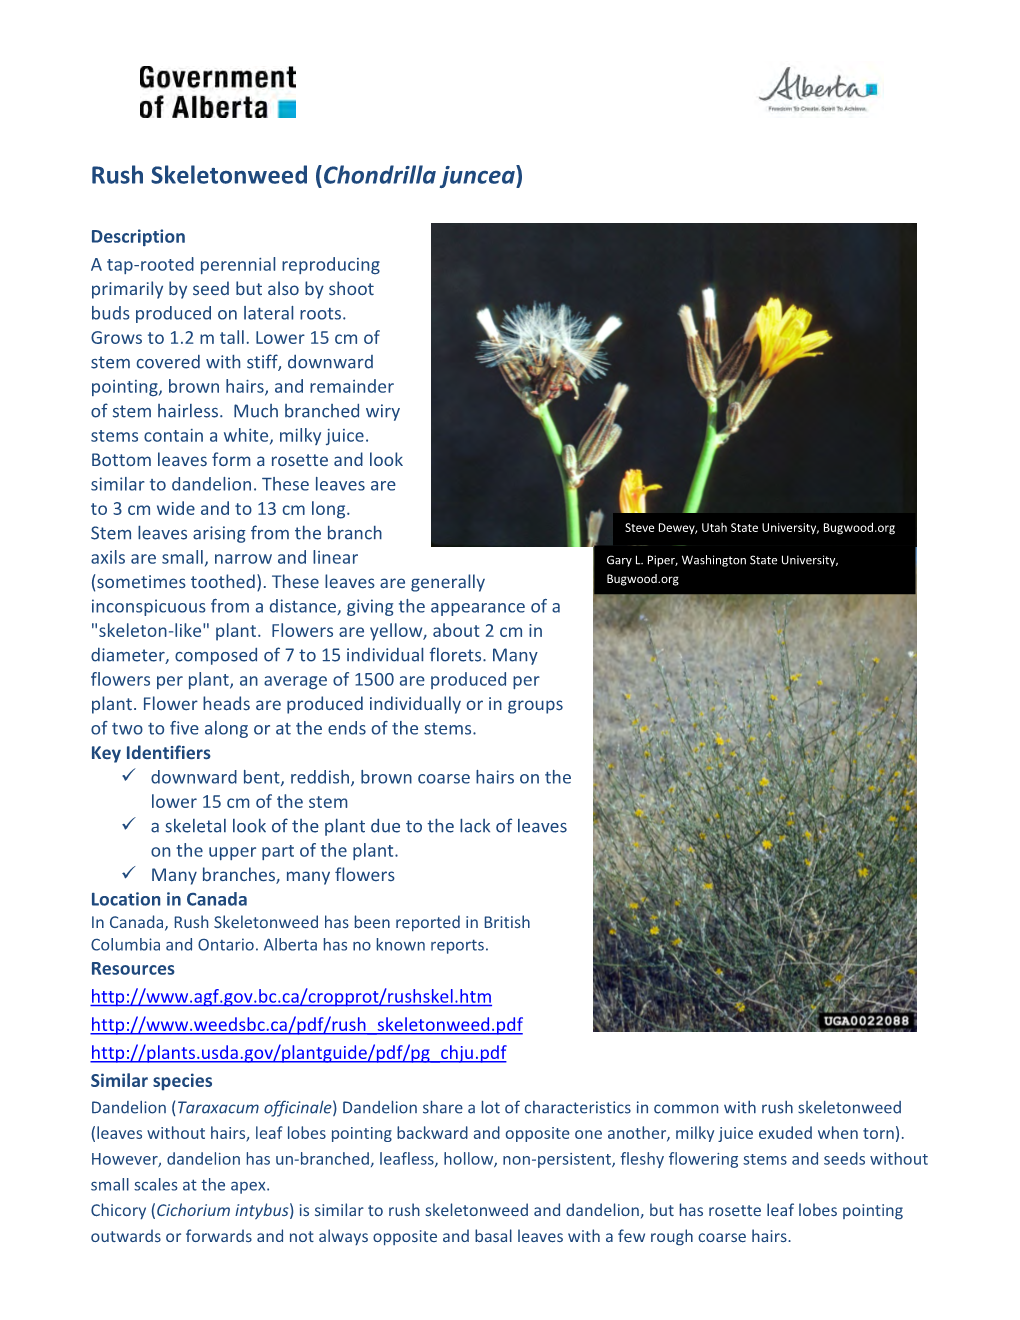 Rush Skeletonweed (Chondrilla Juncea)